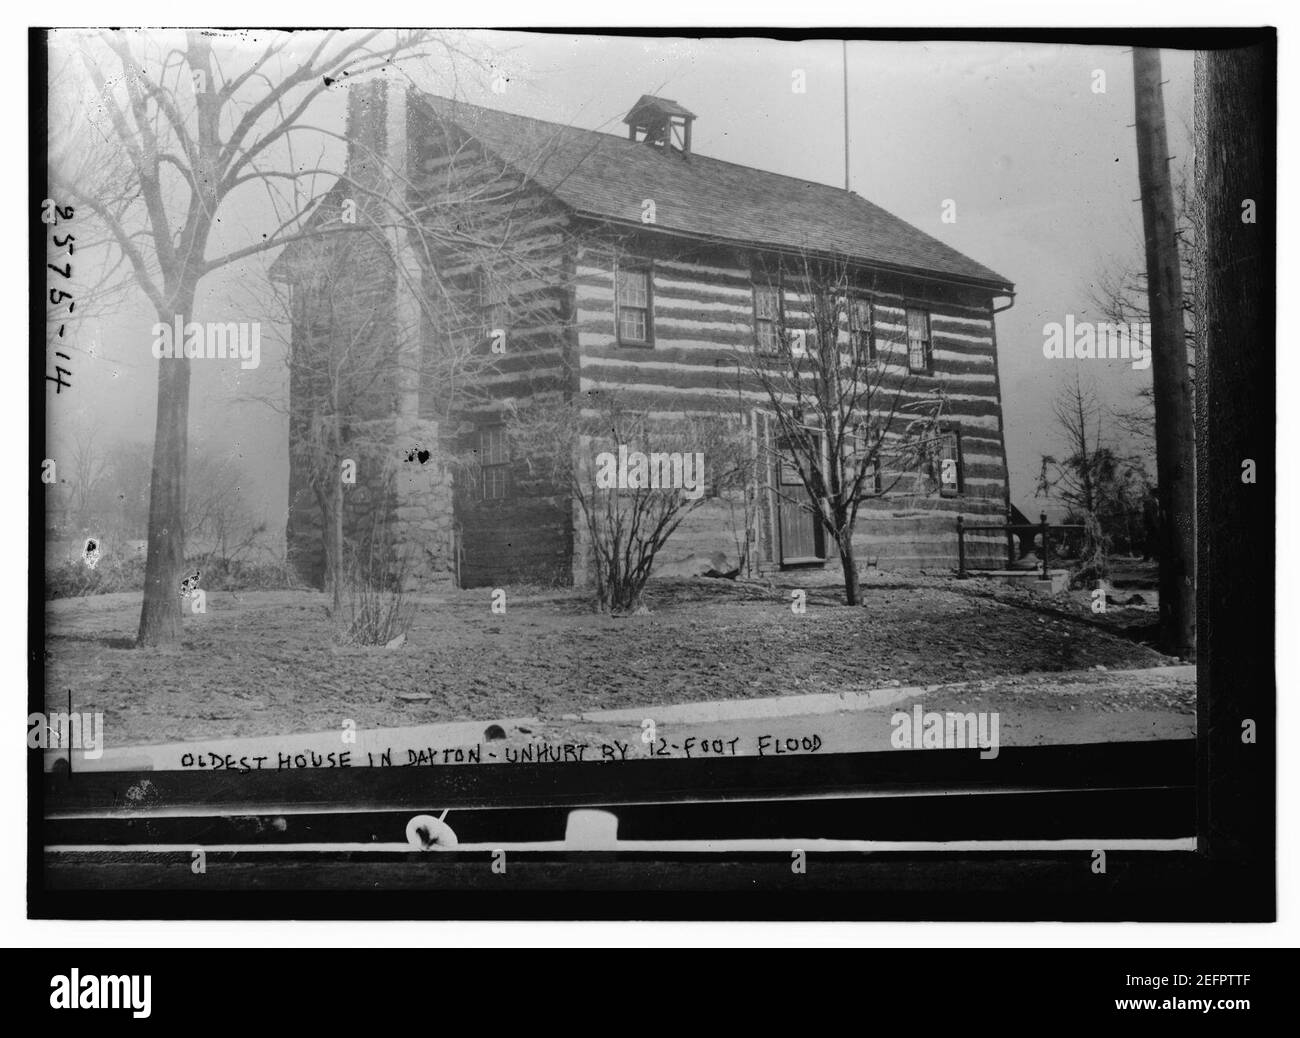 Oldest house in Dayton - unhurt by 12 foot flood Stock Photo